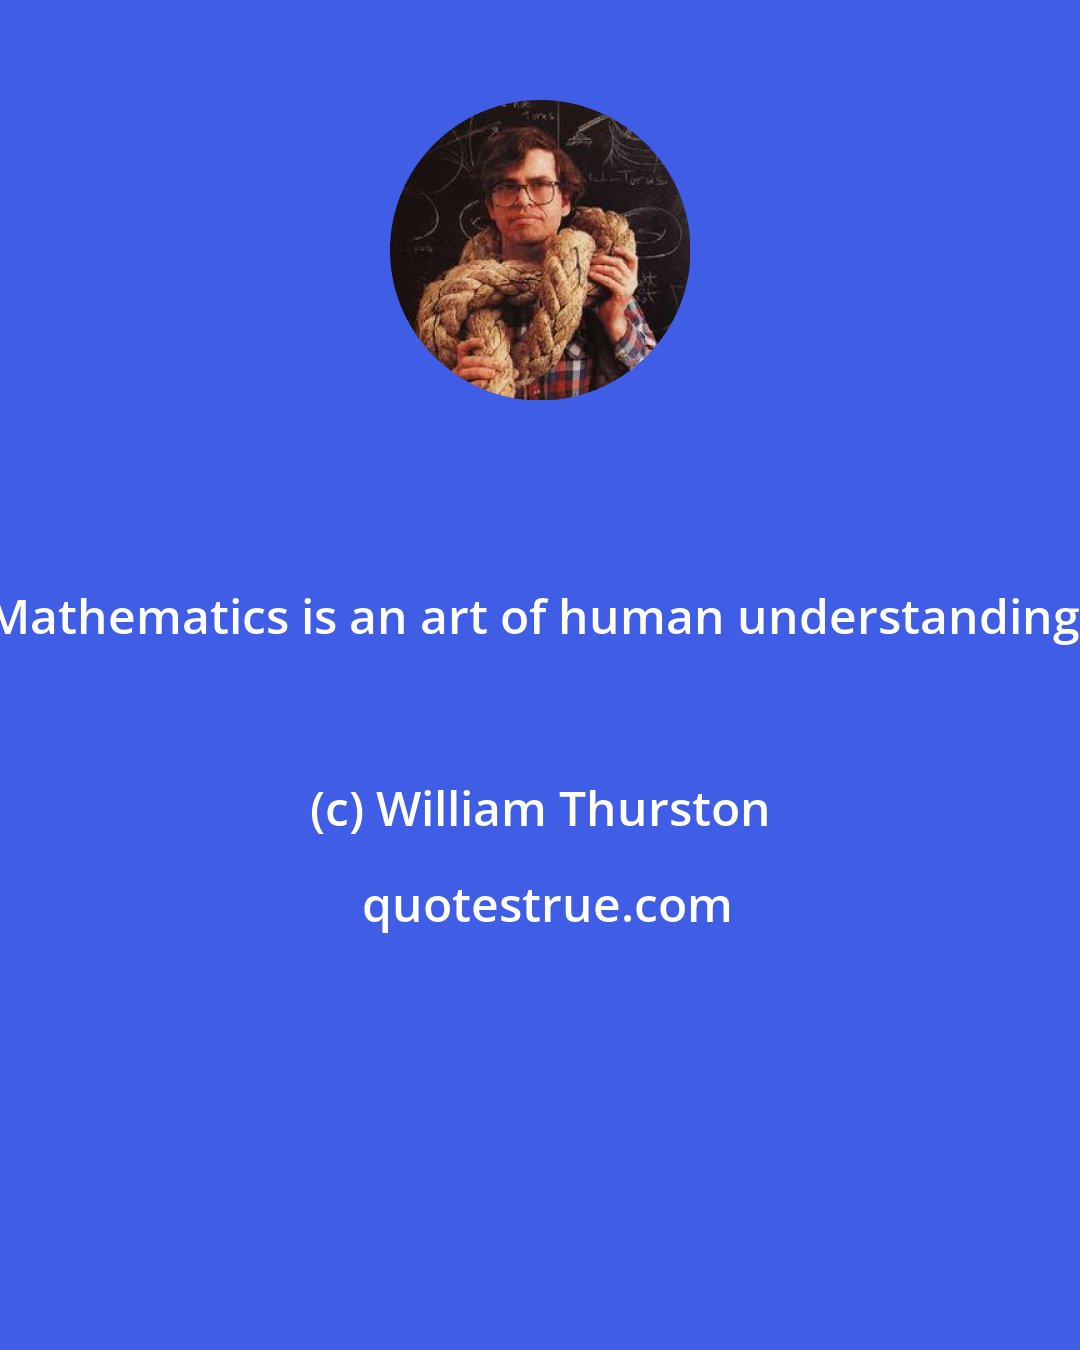 William Thurston: Mathematics is an art of human understanding.